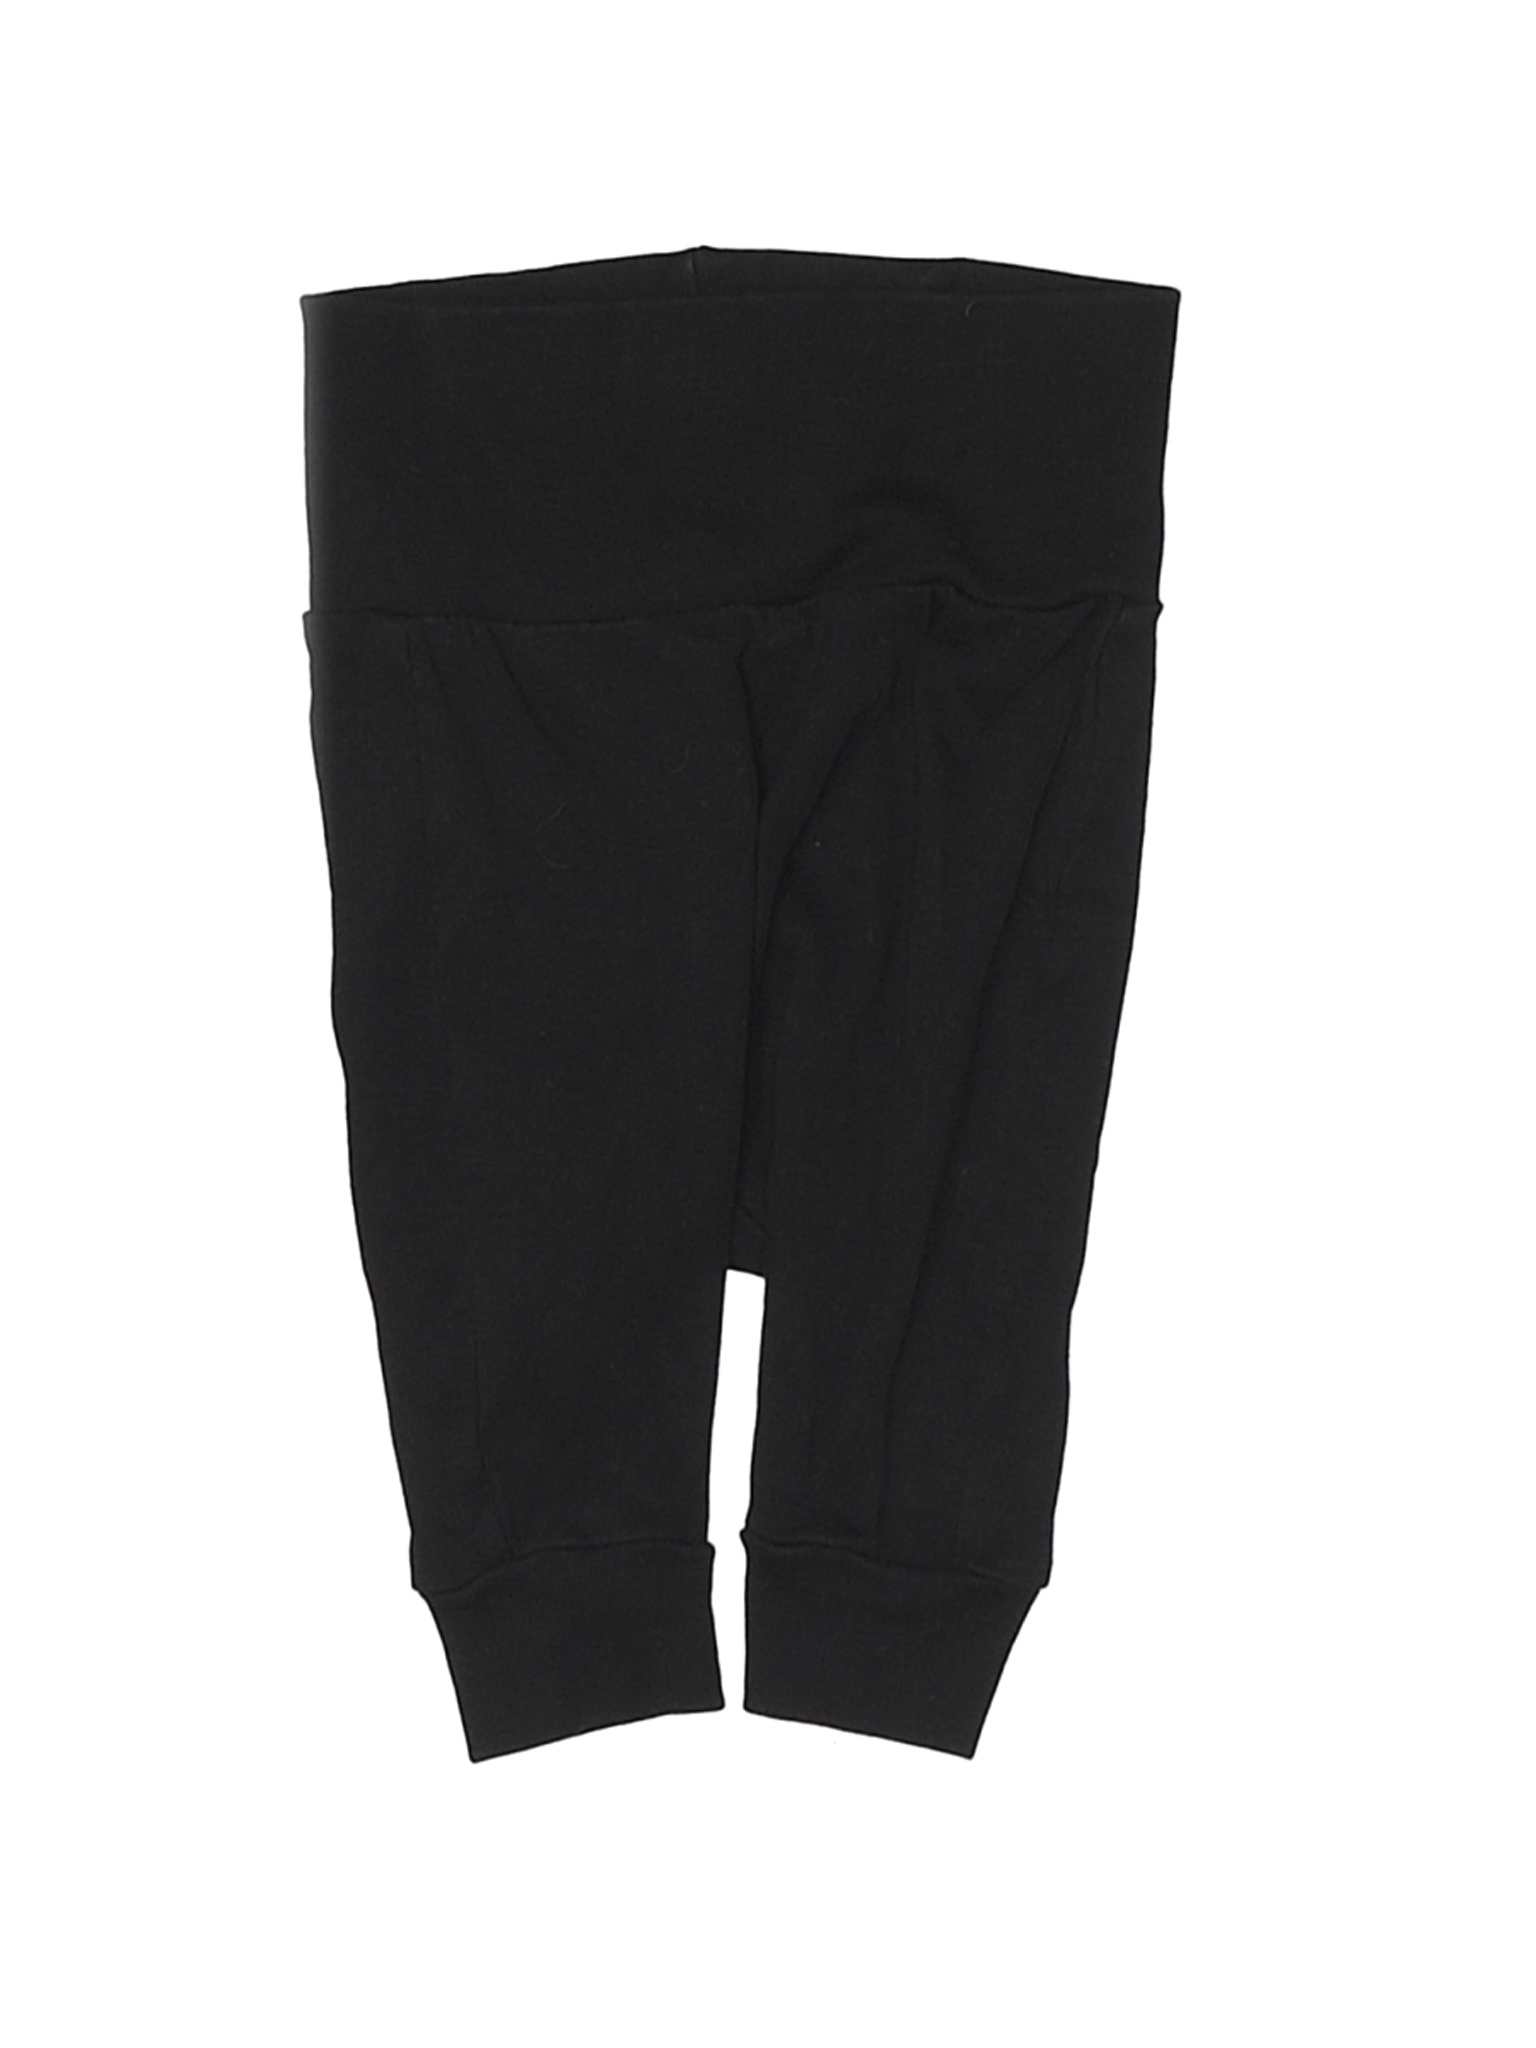 H&M Girls Black Casual Pants 0-3 Months | eBay